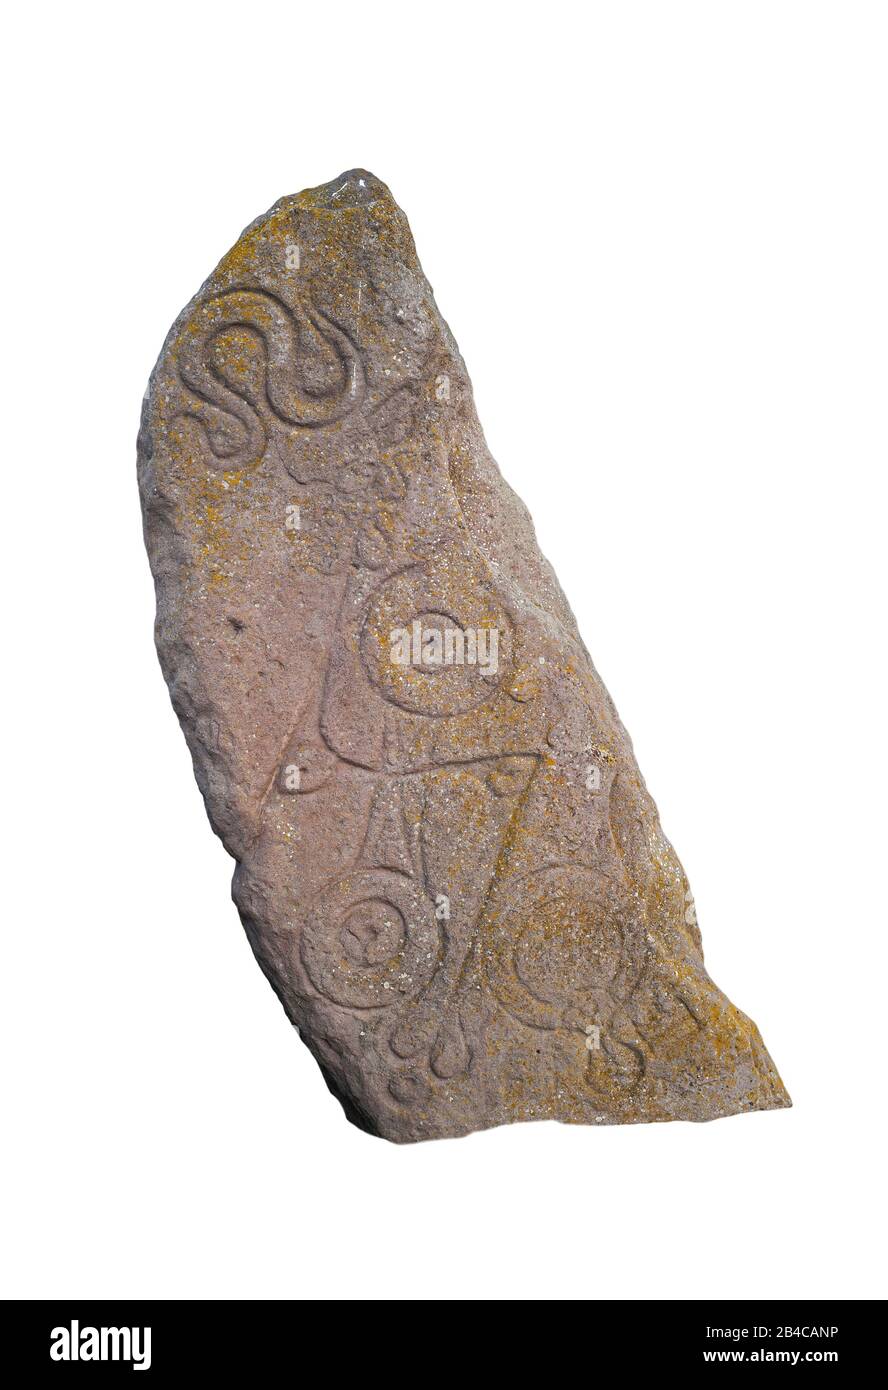 The Serpent Stone, carved Pictish stone at Aberlemno, Scotland, UK against white background Stock Photo